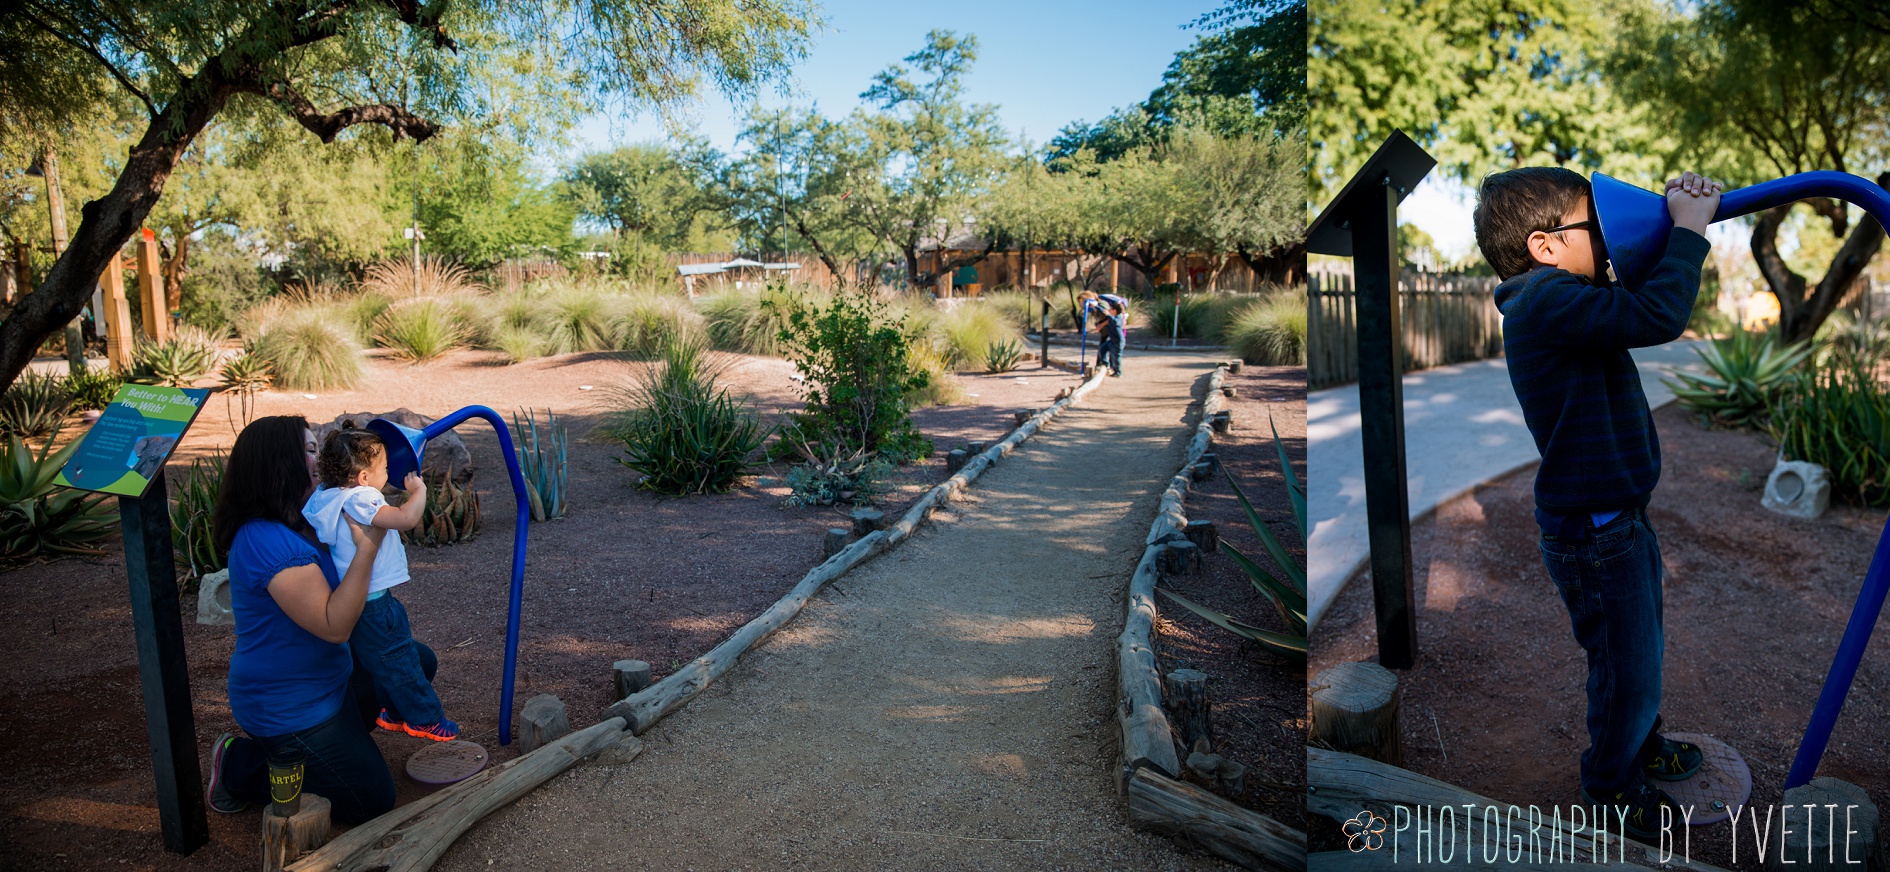 Tucson Reid Park Zoo